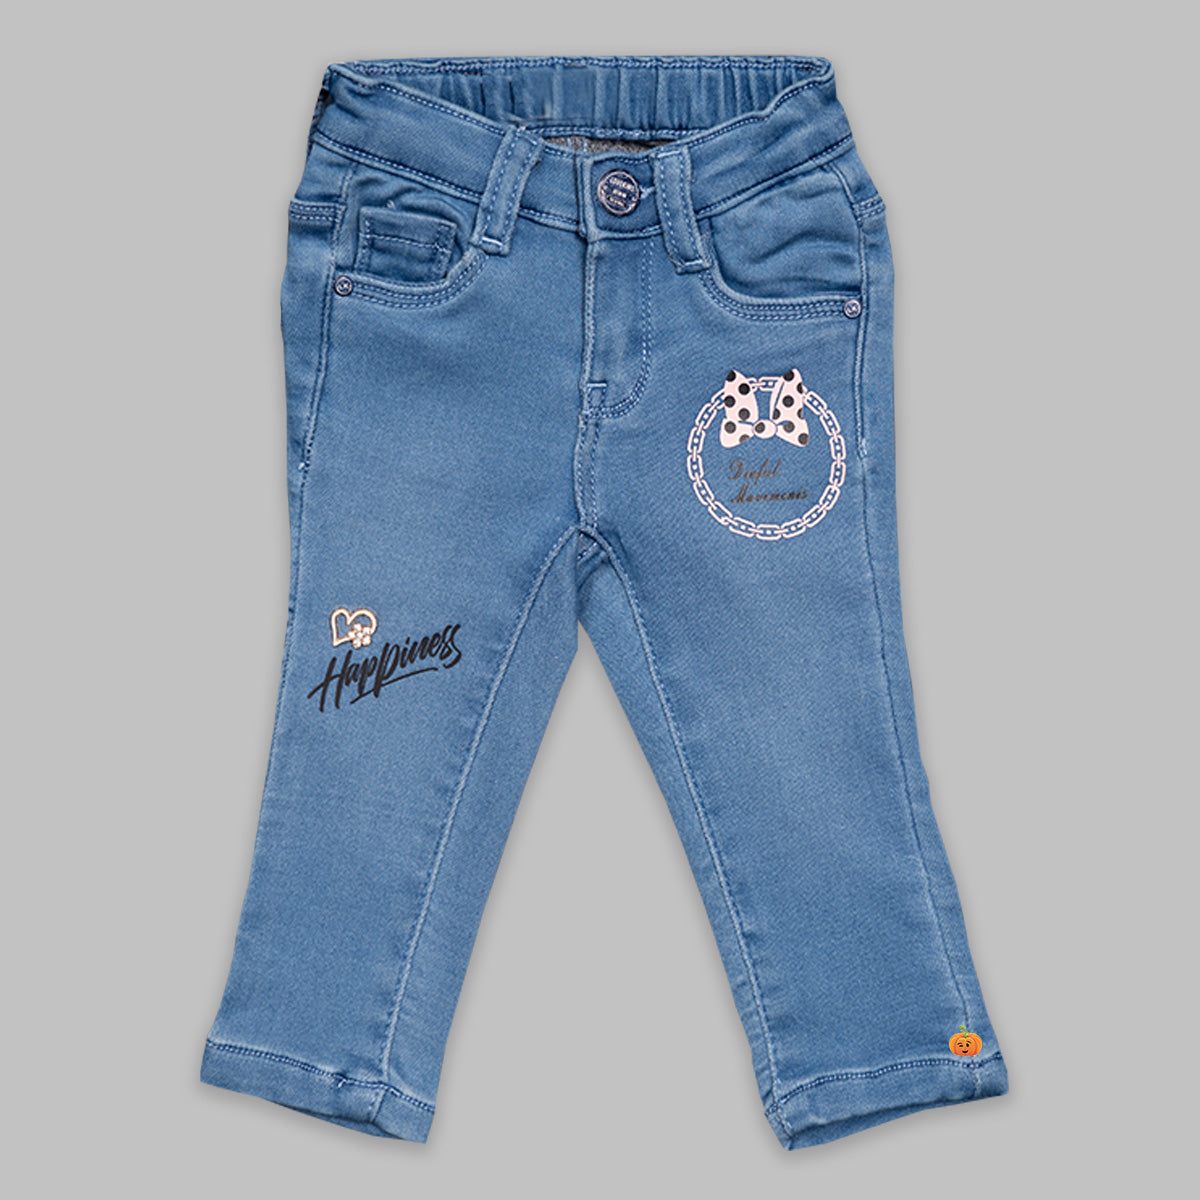 Altatac Skinny Jeans Designer Fashion Stretch Denim Pants for Girls -  Medium Blue, W28, US Size 8 - Walmart.com